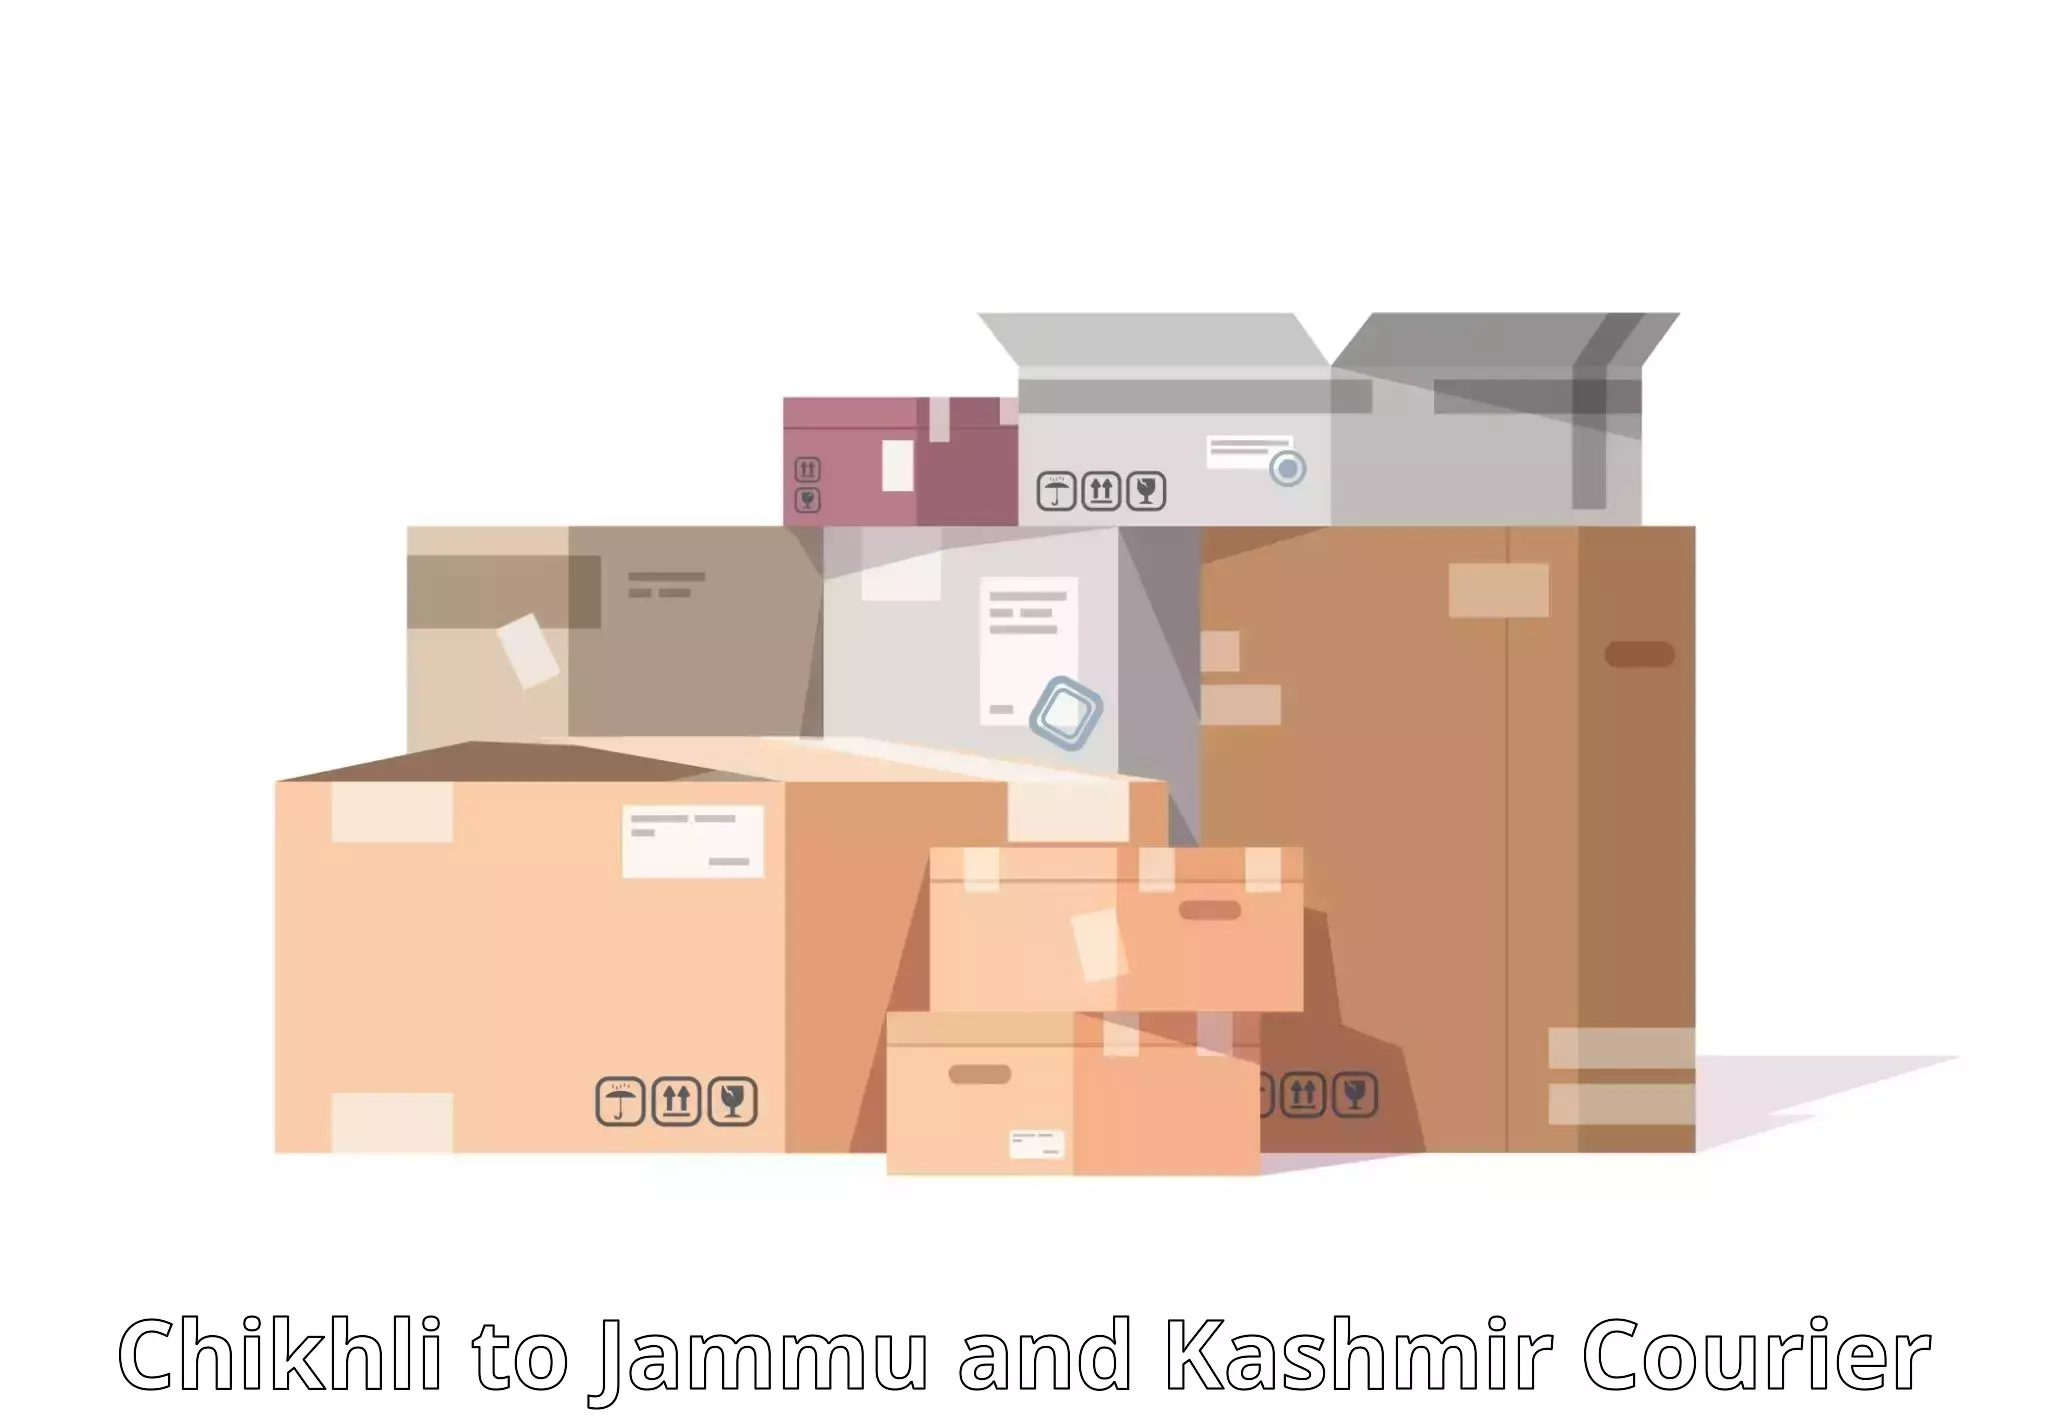 Urgent courier needs in Chikhli to Rajouri